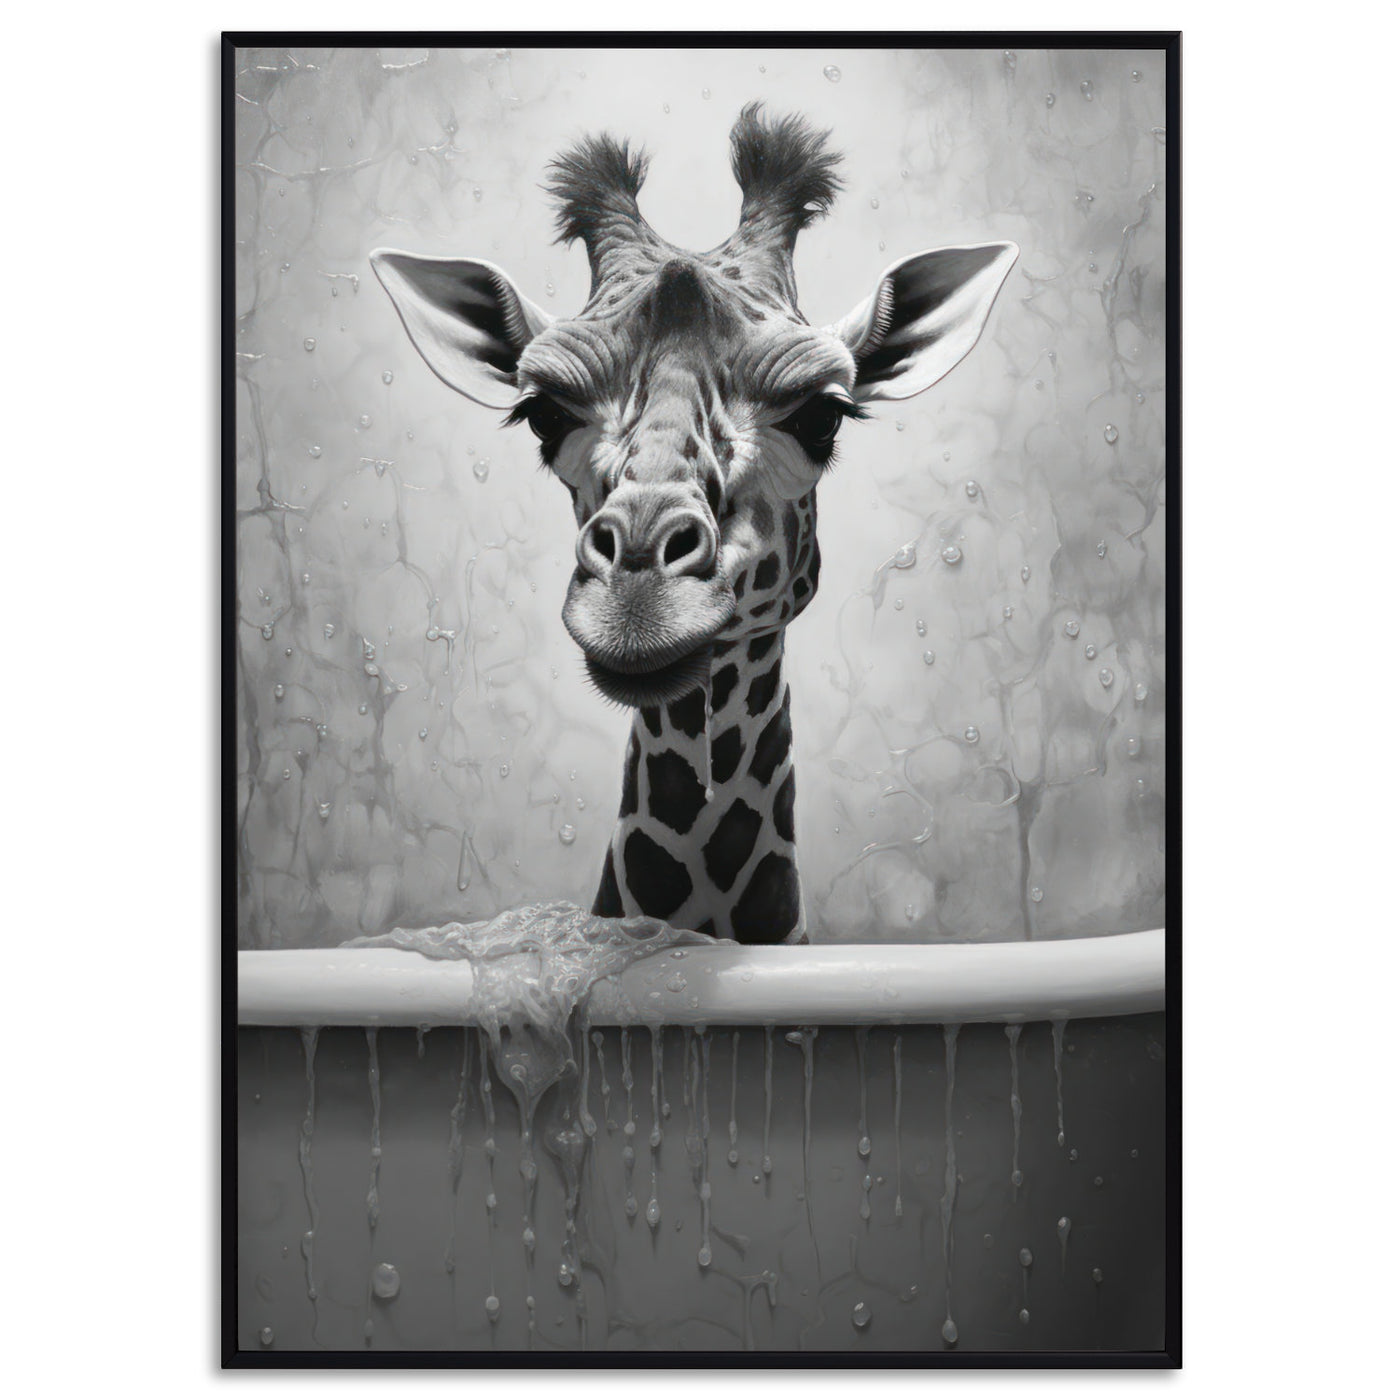 Badezimmer Poster Giraffe in Badewanne Badezimmer Bild Gäste WC Deko Bilder Lustig Trendige Poster Wanddeko Art Deco Wanddekoration